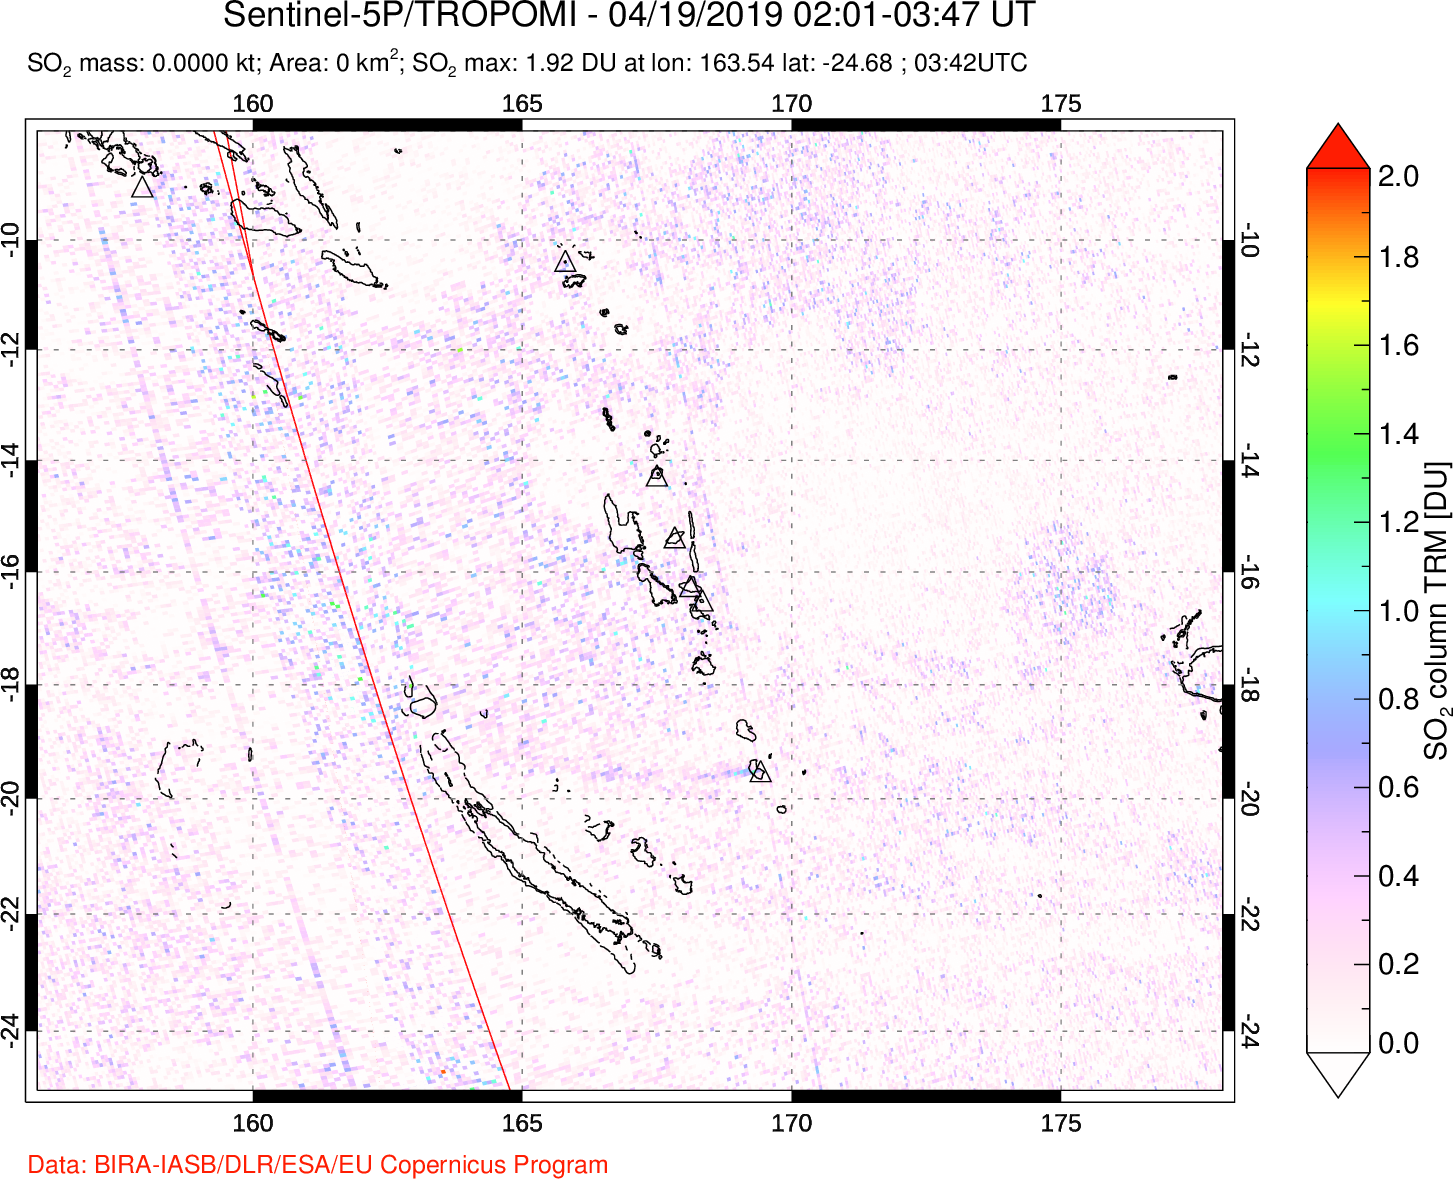 A sulfur dioxide image over Vanuatu, South Pacific on Apr 19, 2019.